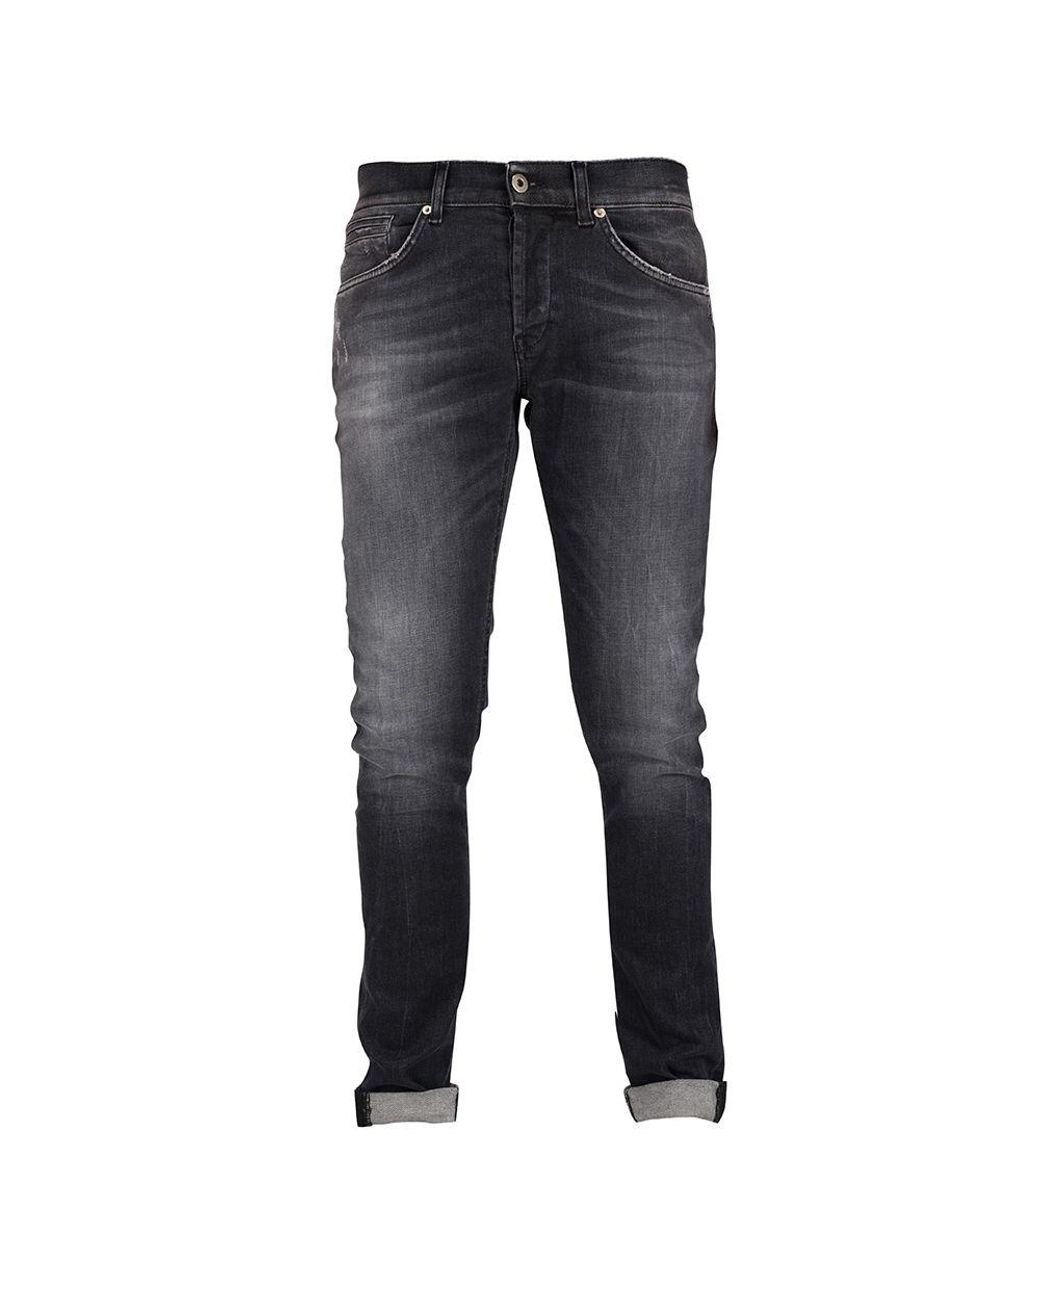 Dondup Denim Jeans in Black for Men - Lyst